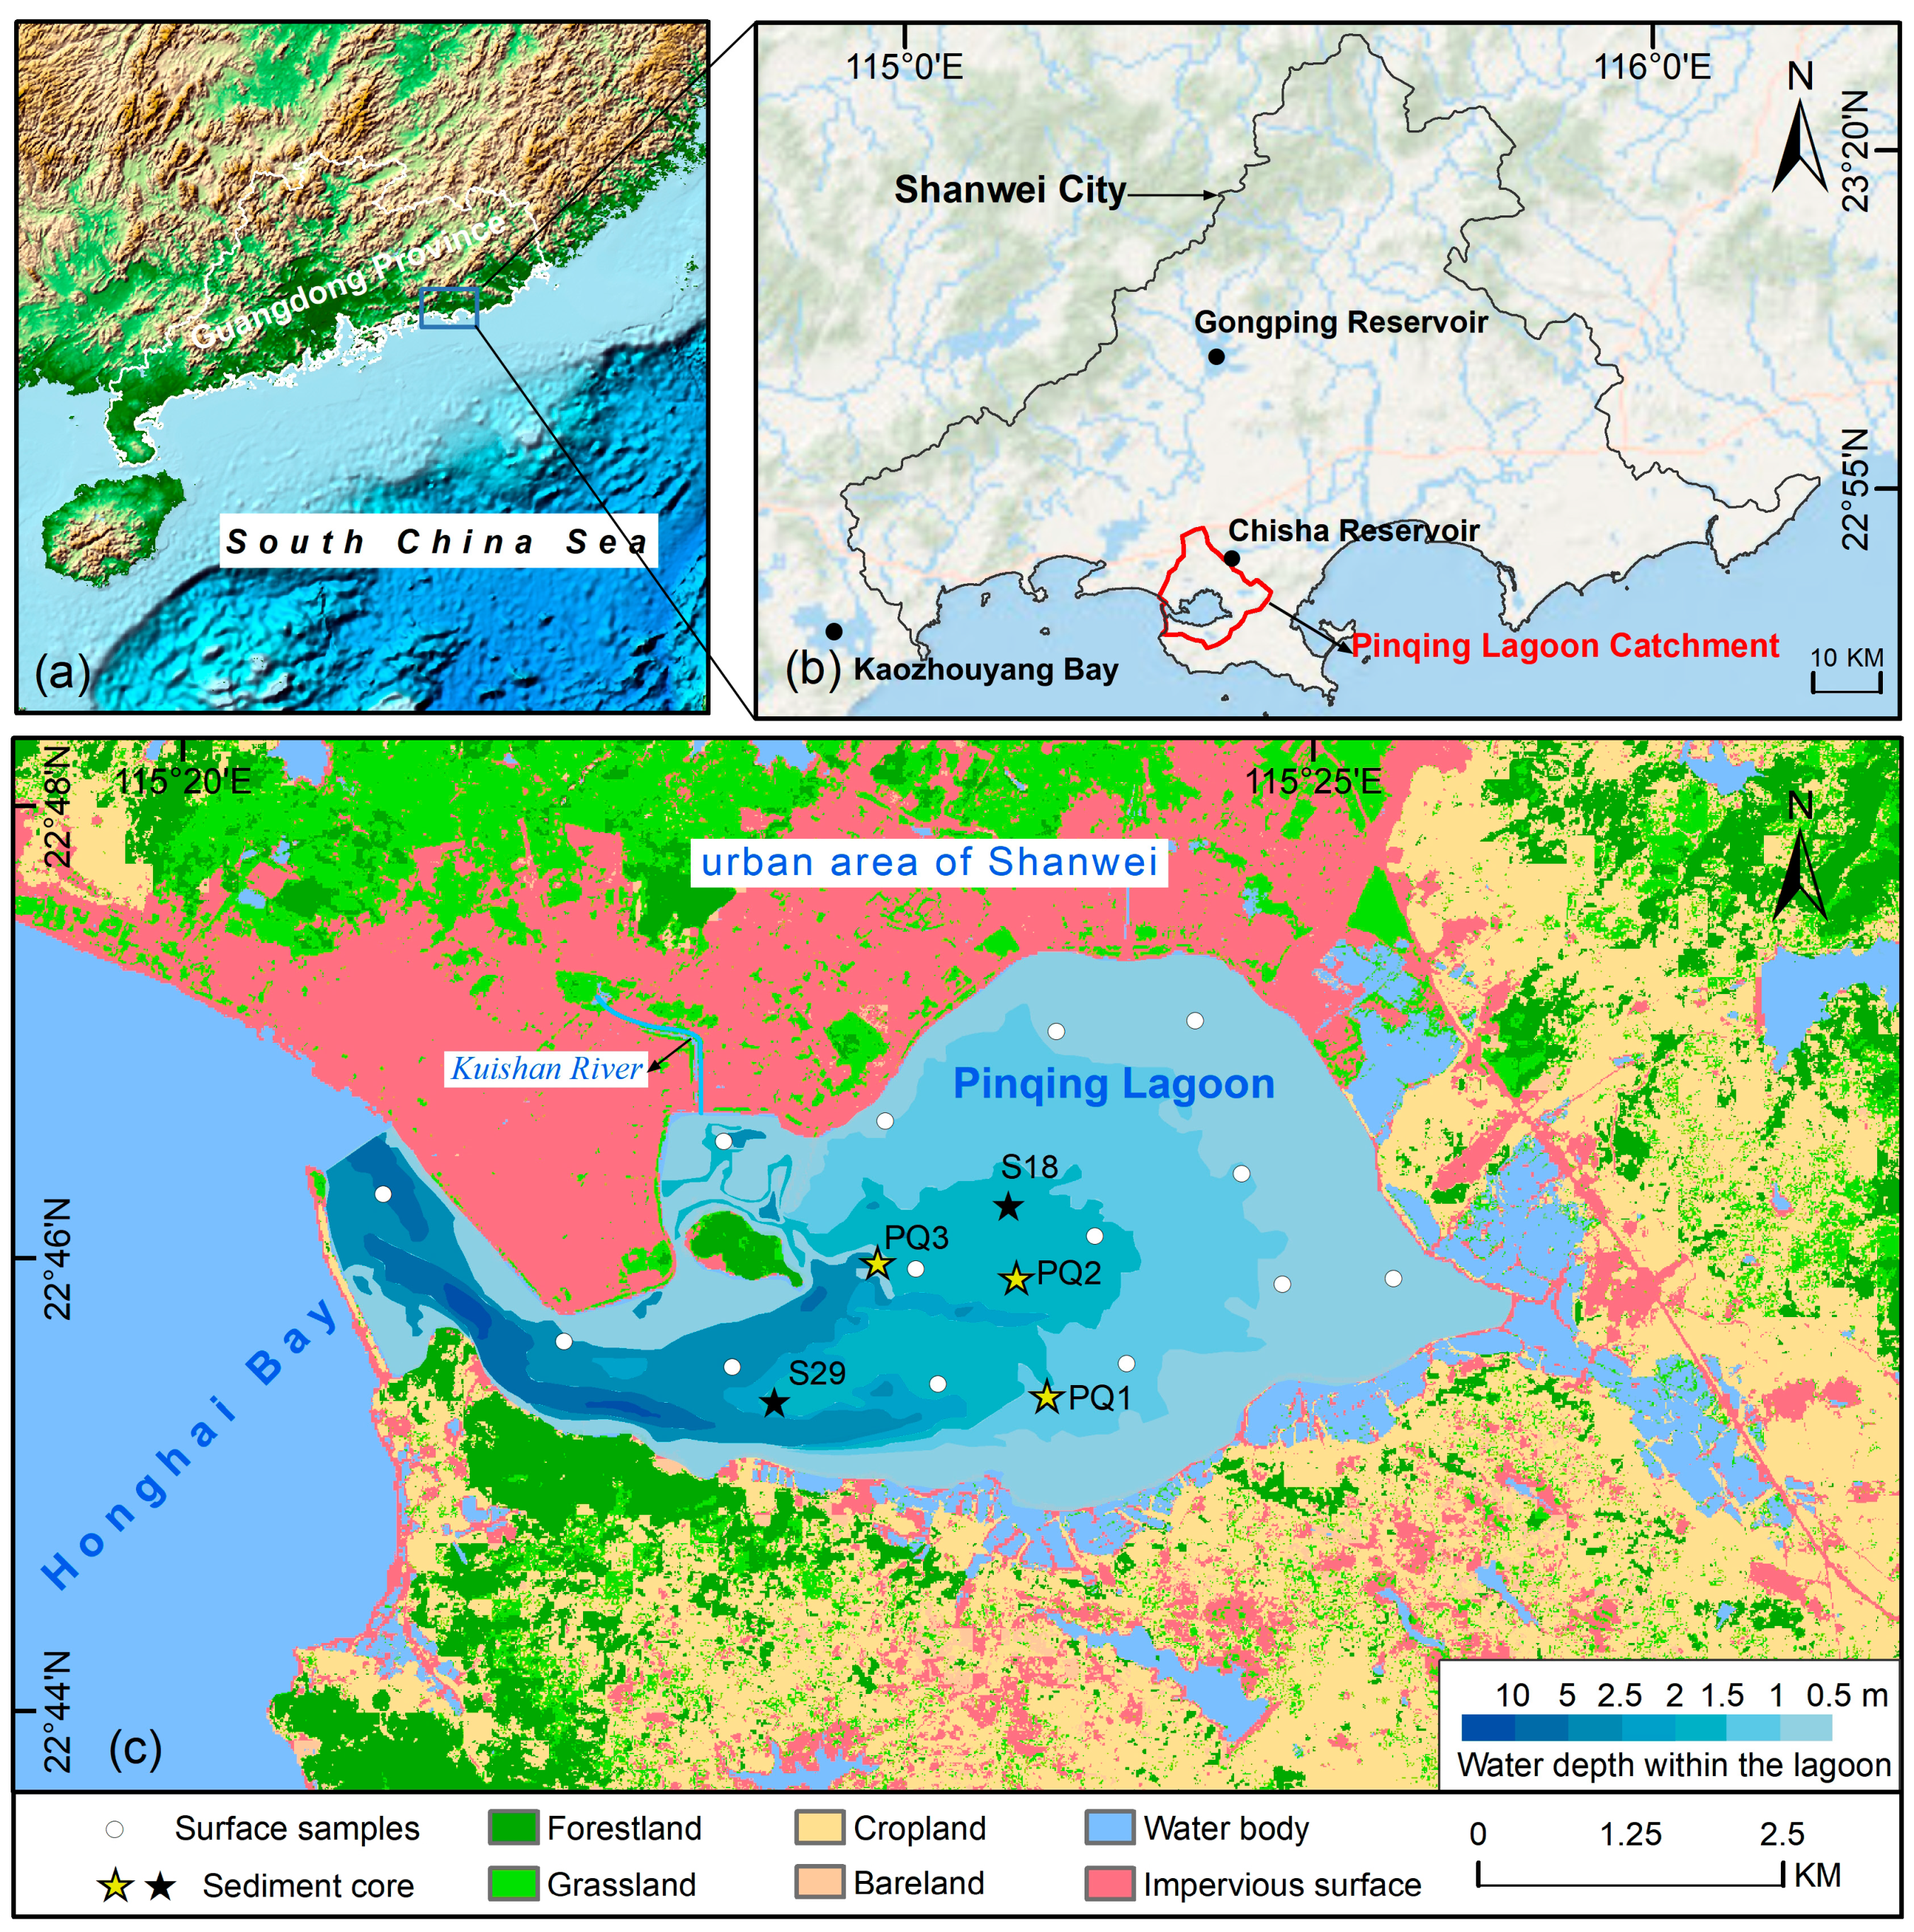 Trophic level and heavy metal pollution of Sardinella albella in Liusha  Bay, Beibu Gulf of the South China Sea - ScienceDirect